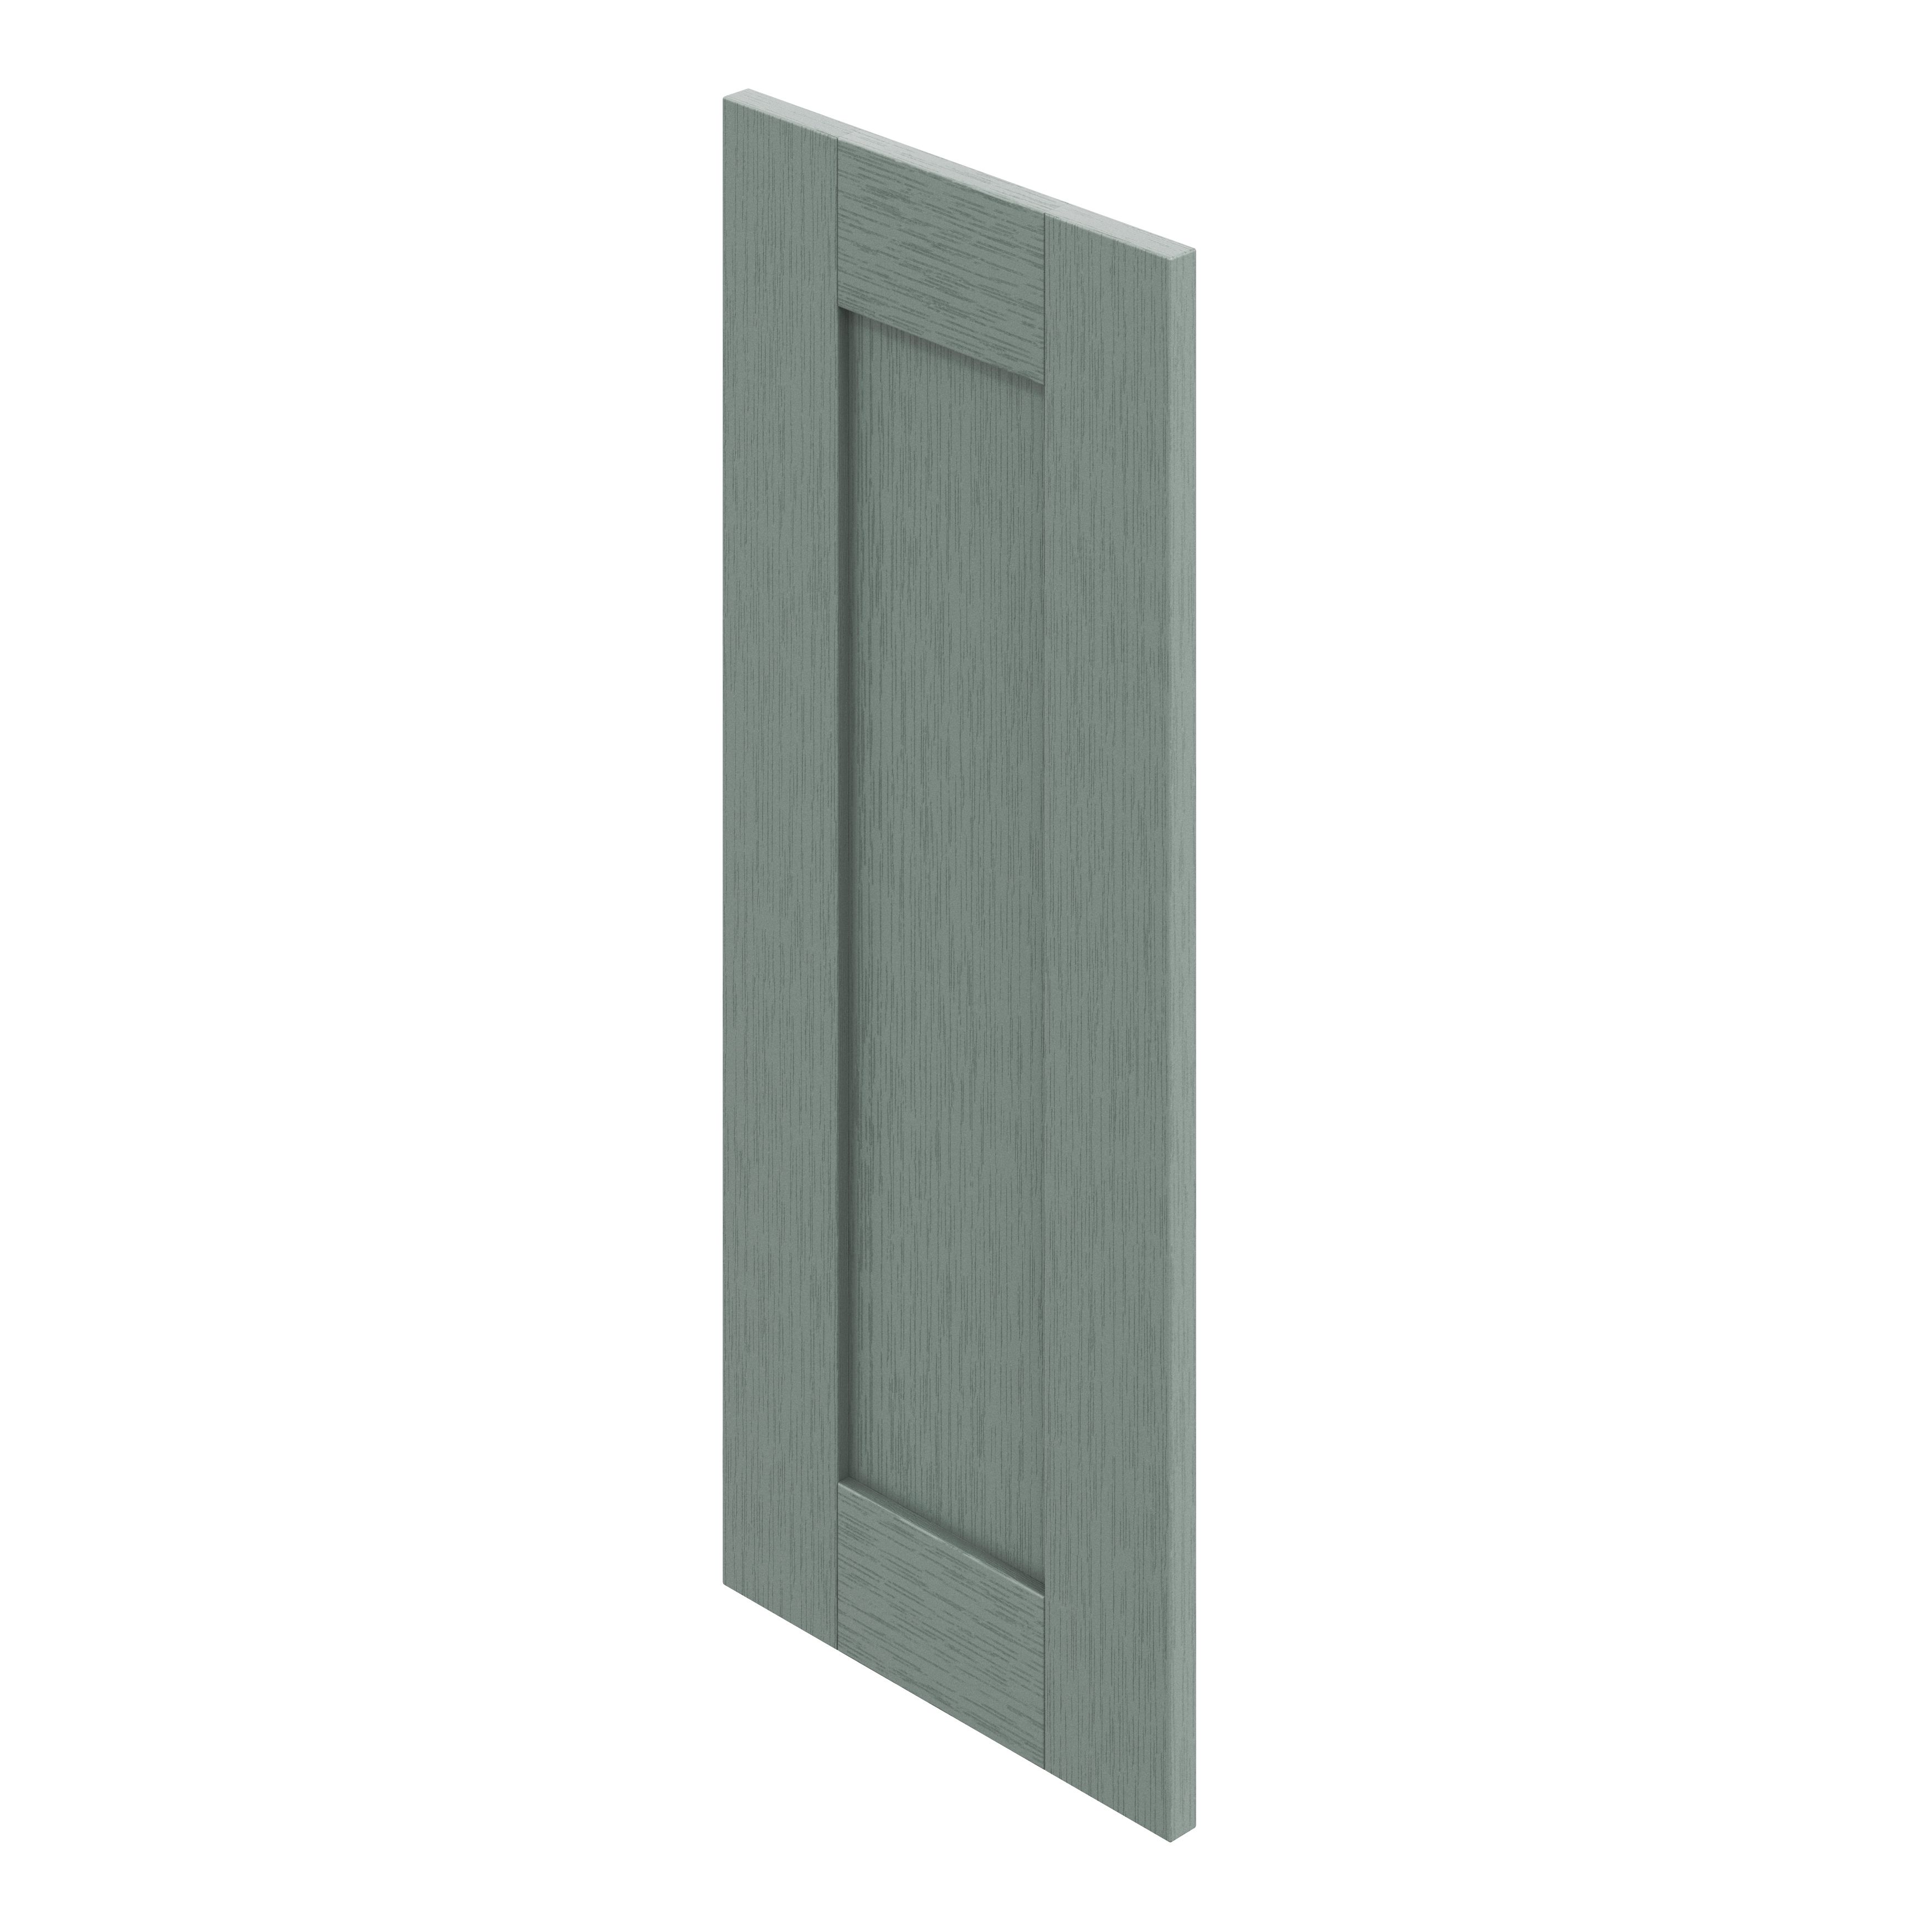 GoodHome Alpinia Matt Green Painted Wood Effect Shaker Highline Cabinet door (W)300mm (H)715mm (T)18mm